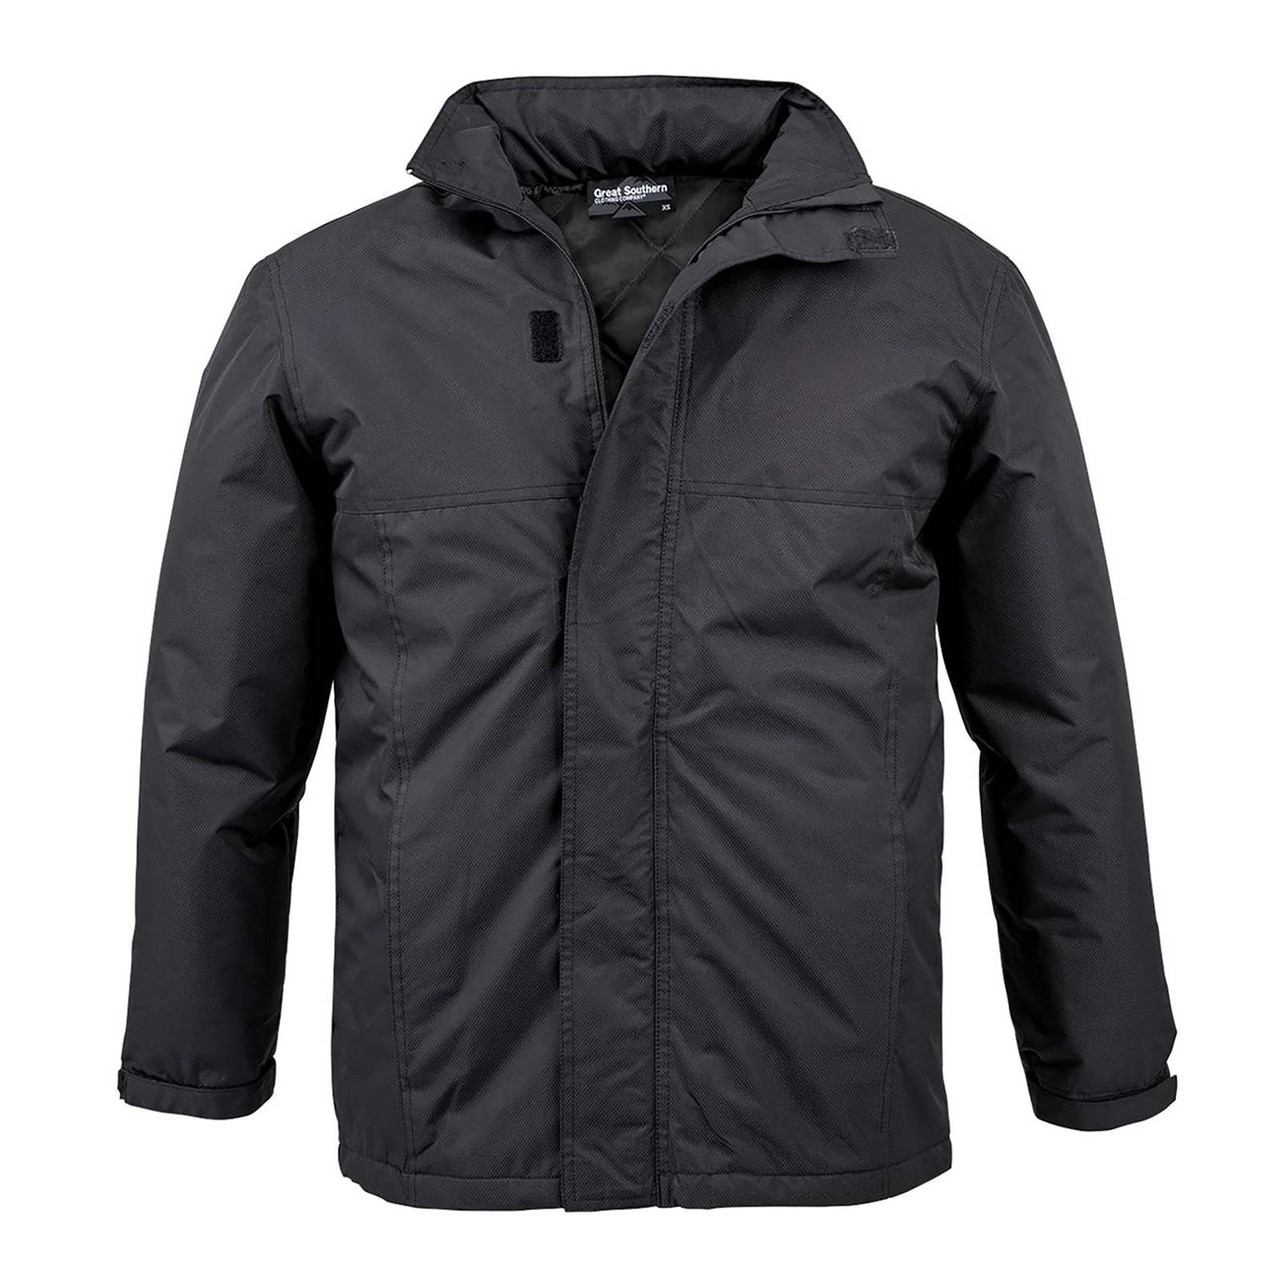 Unisex Taslon Twill All Weather Jacket | Shop Winter Jackets Online ...